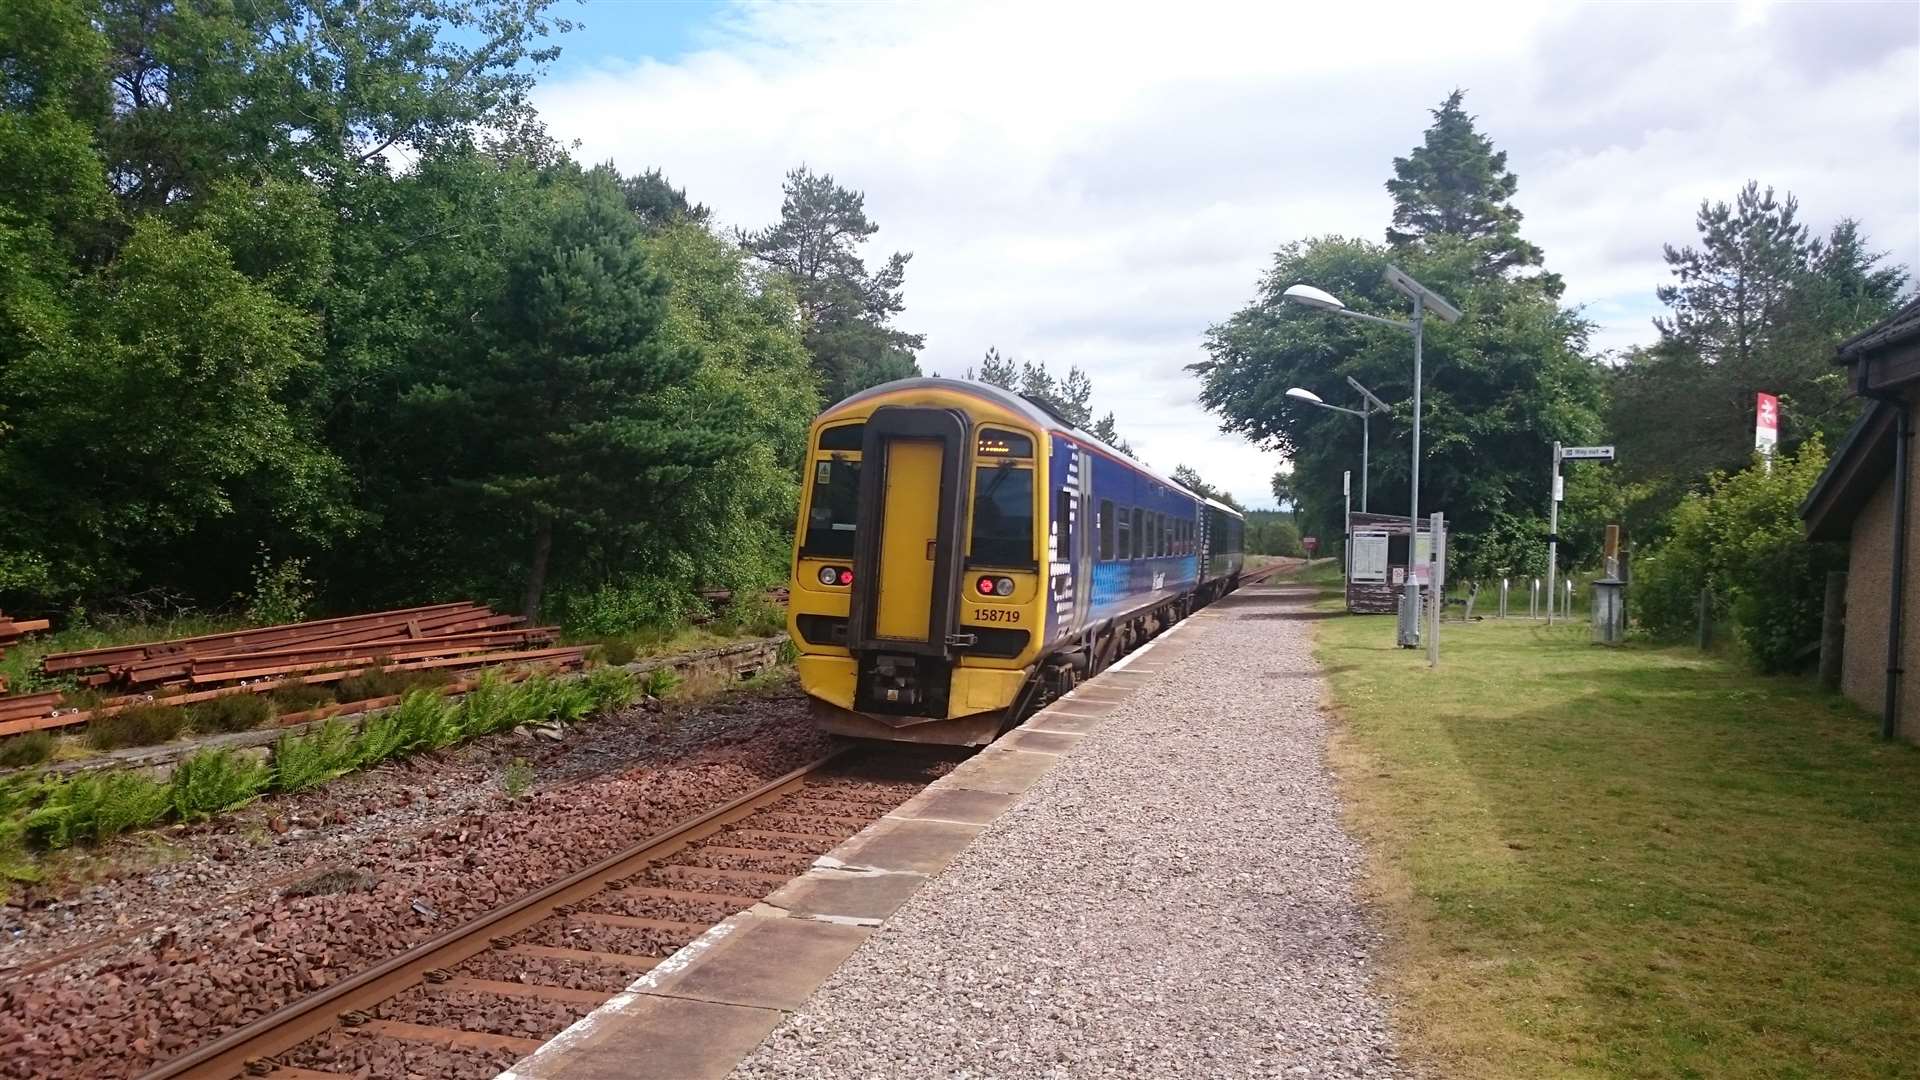 Hundreds of Highland rail journeys were cancelled last year.